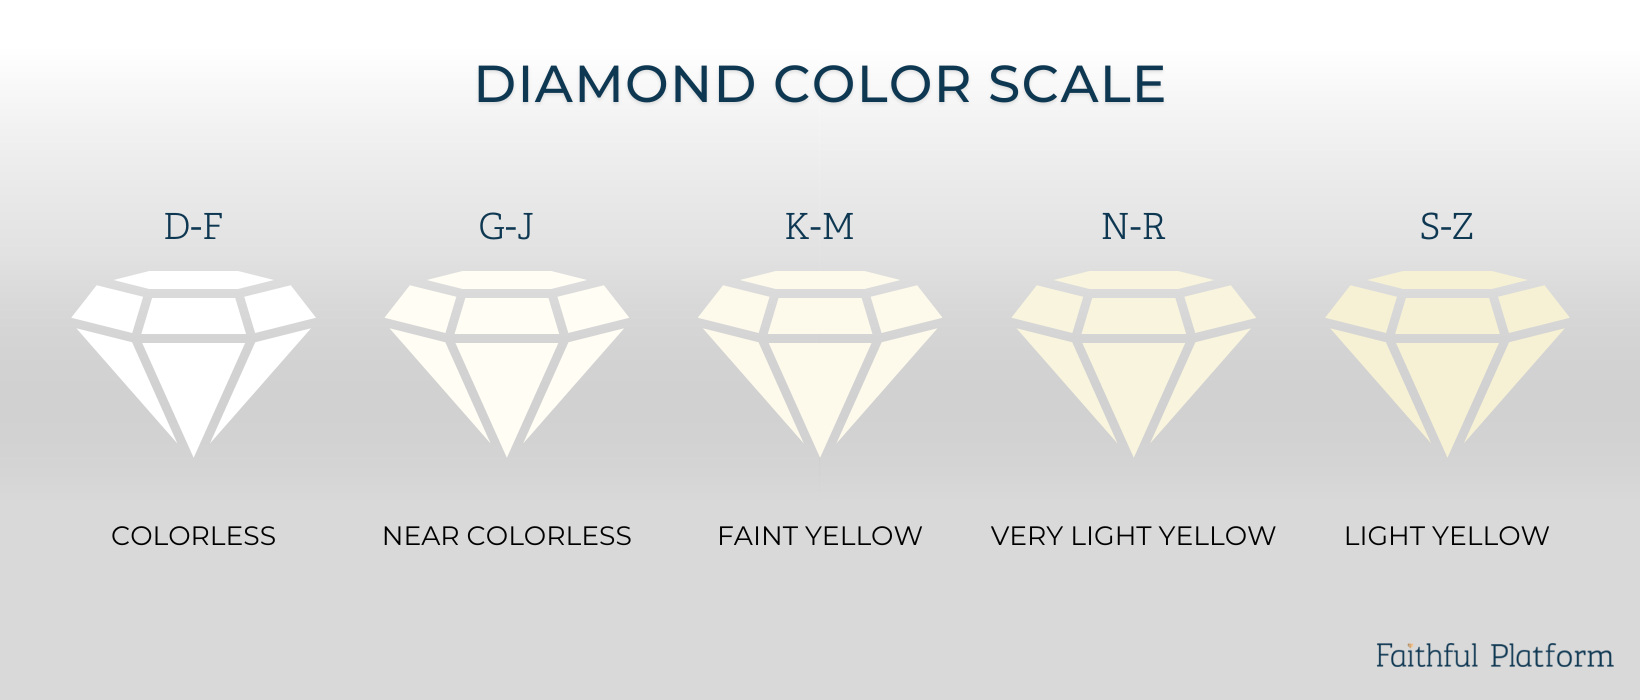 Diamond_color_grading_scale_faithful_platform